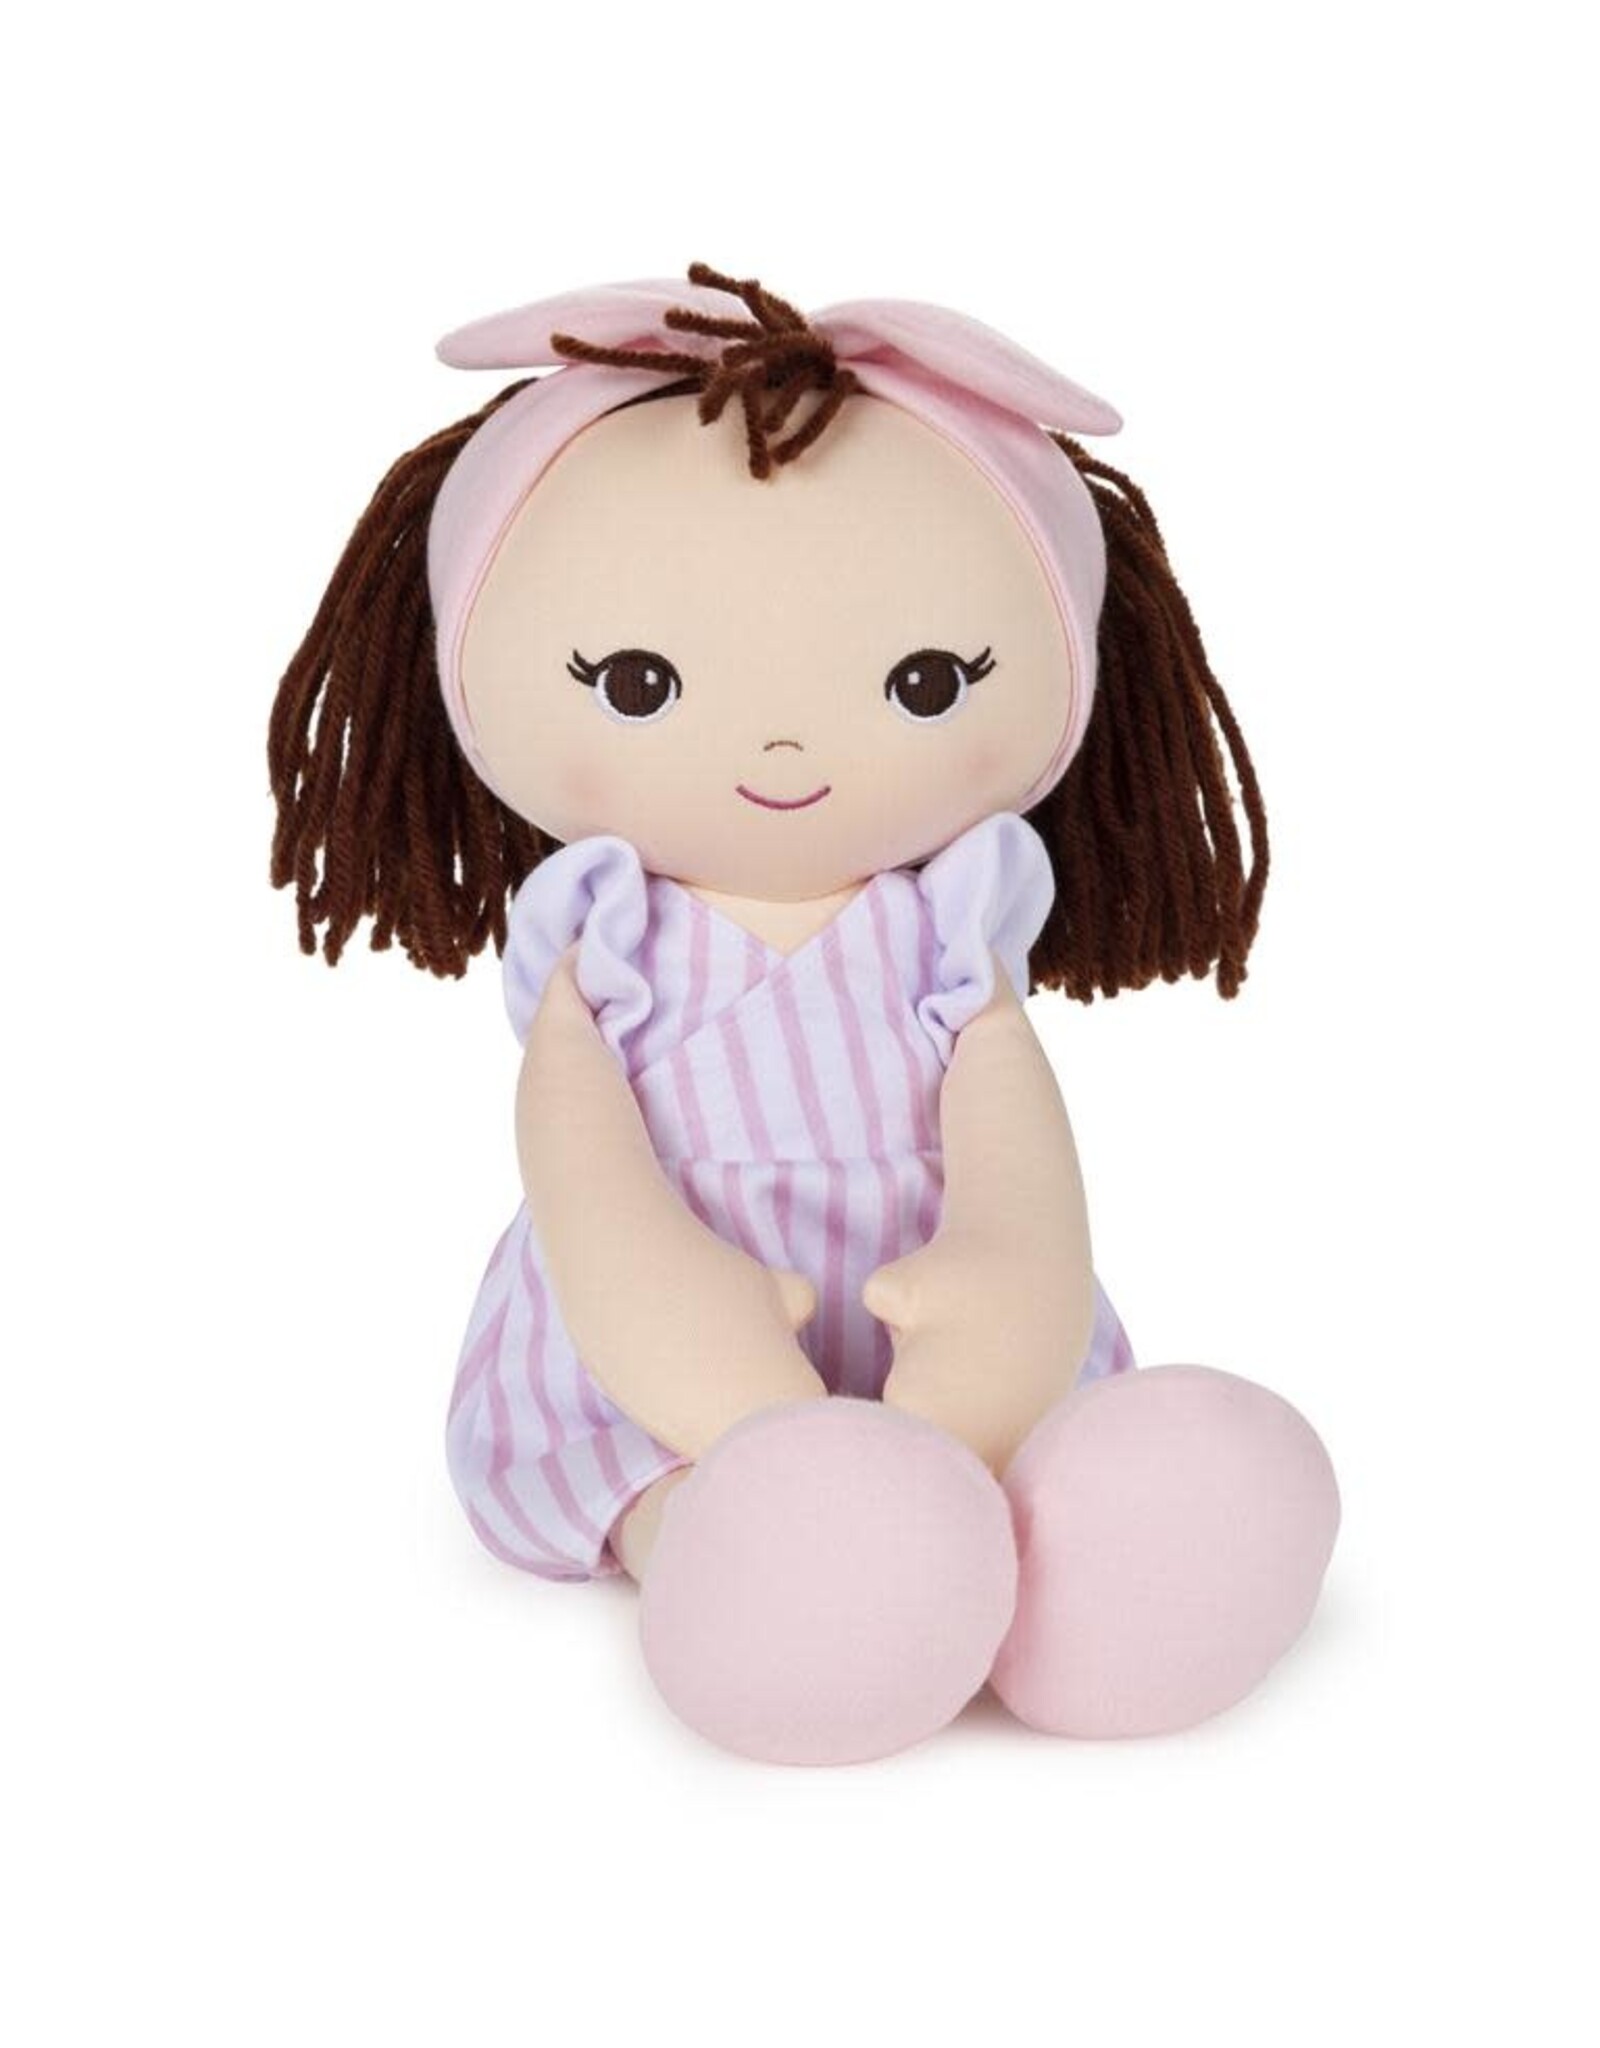 GUND Toddler Doll Pink Striped Dress